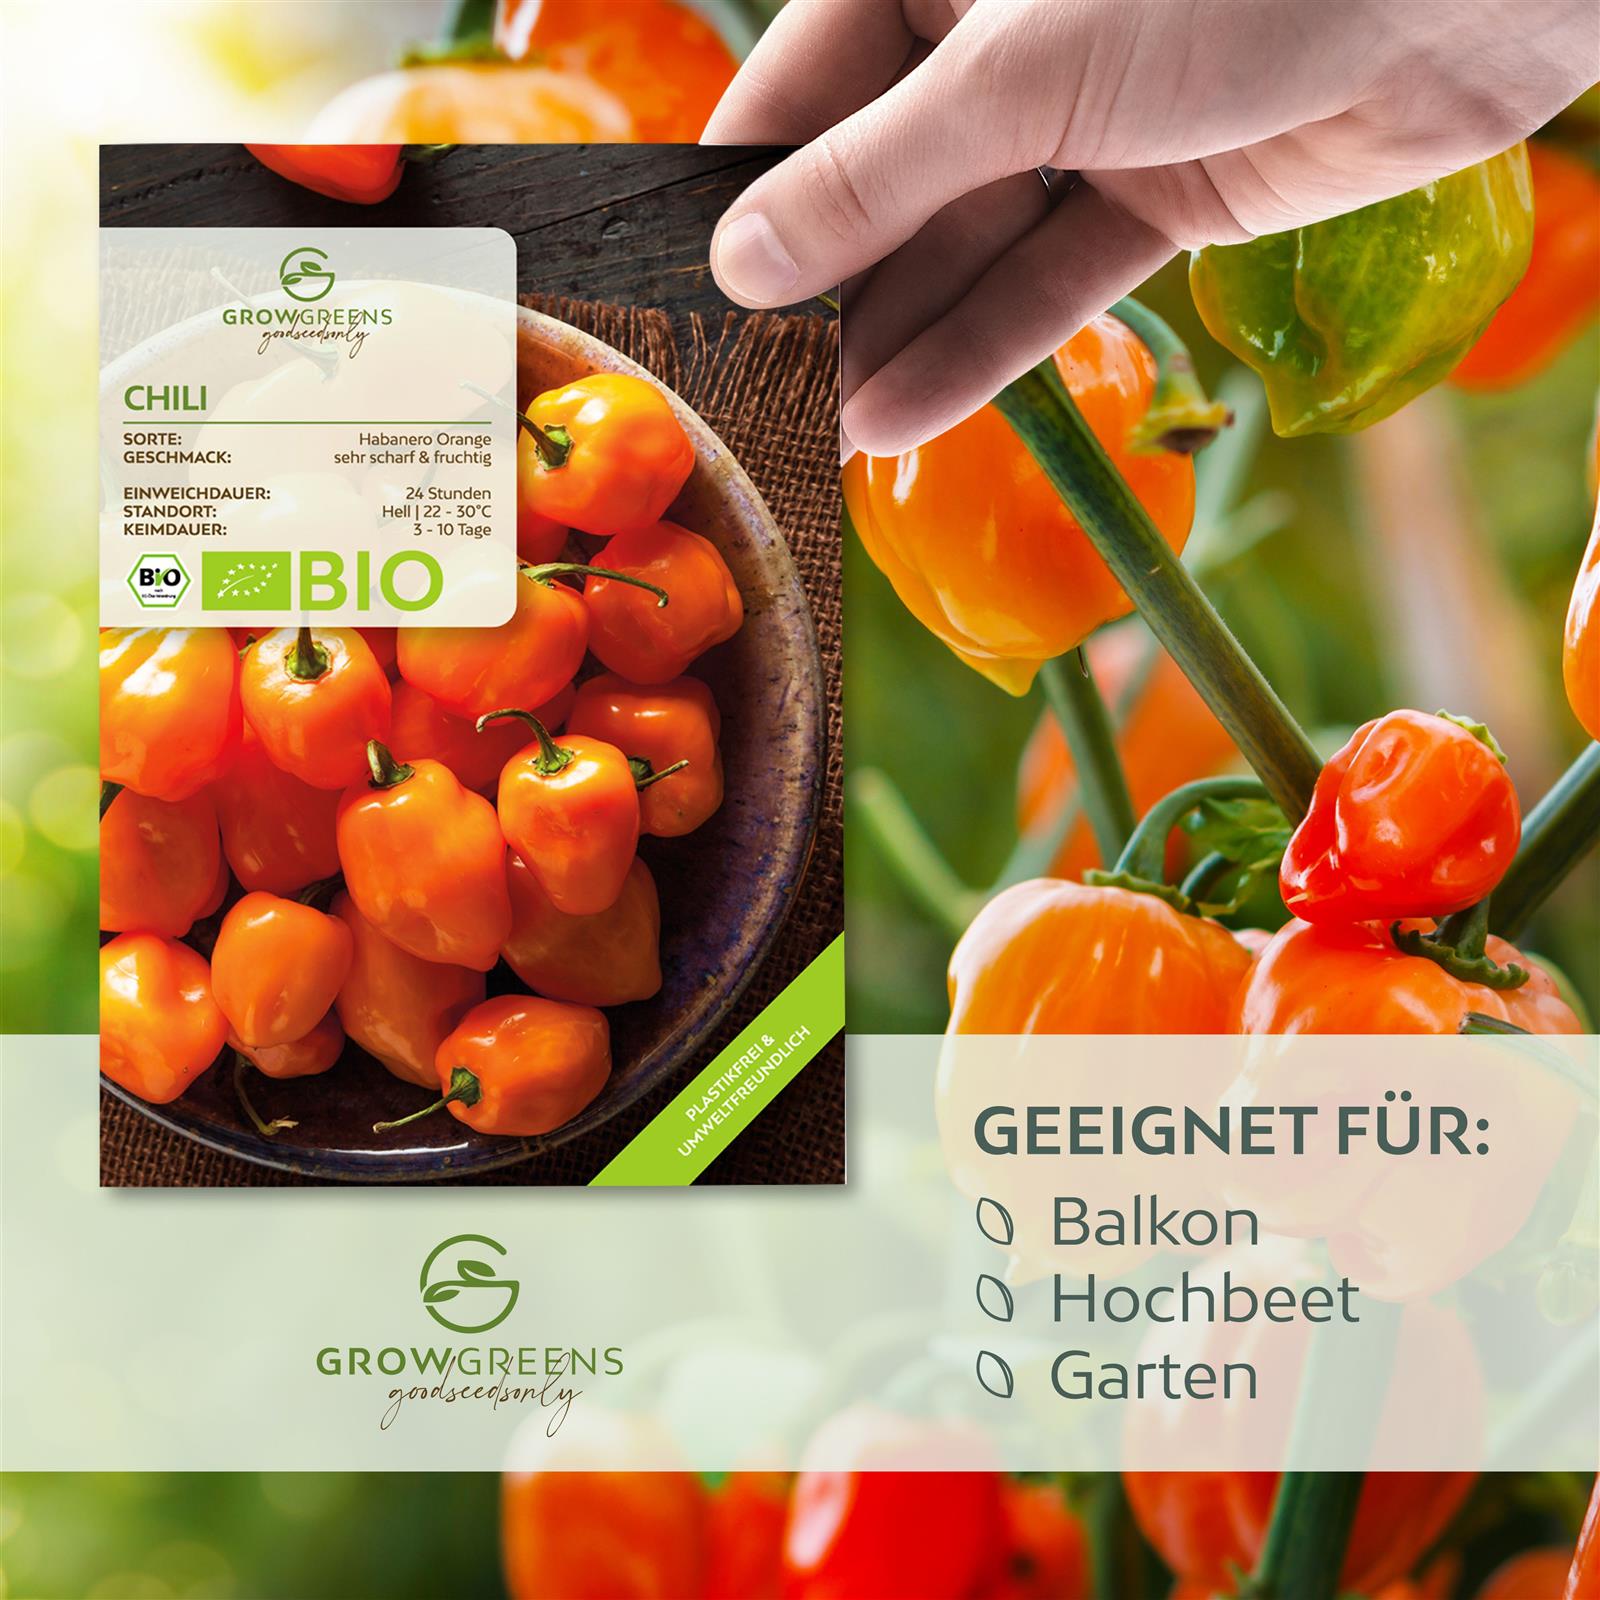 BIO Chili Samen (Habanero Orange, 250.000 Scoville) - Chili Saatgut aus biologischem Anbau (10 Korn)